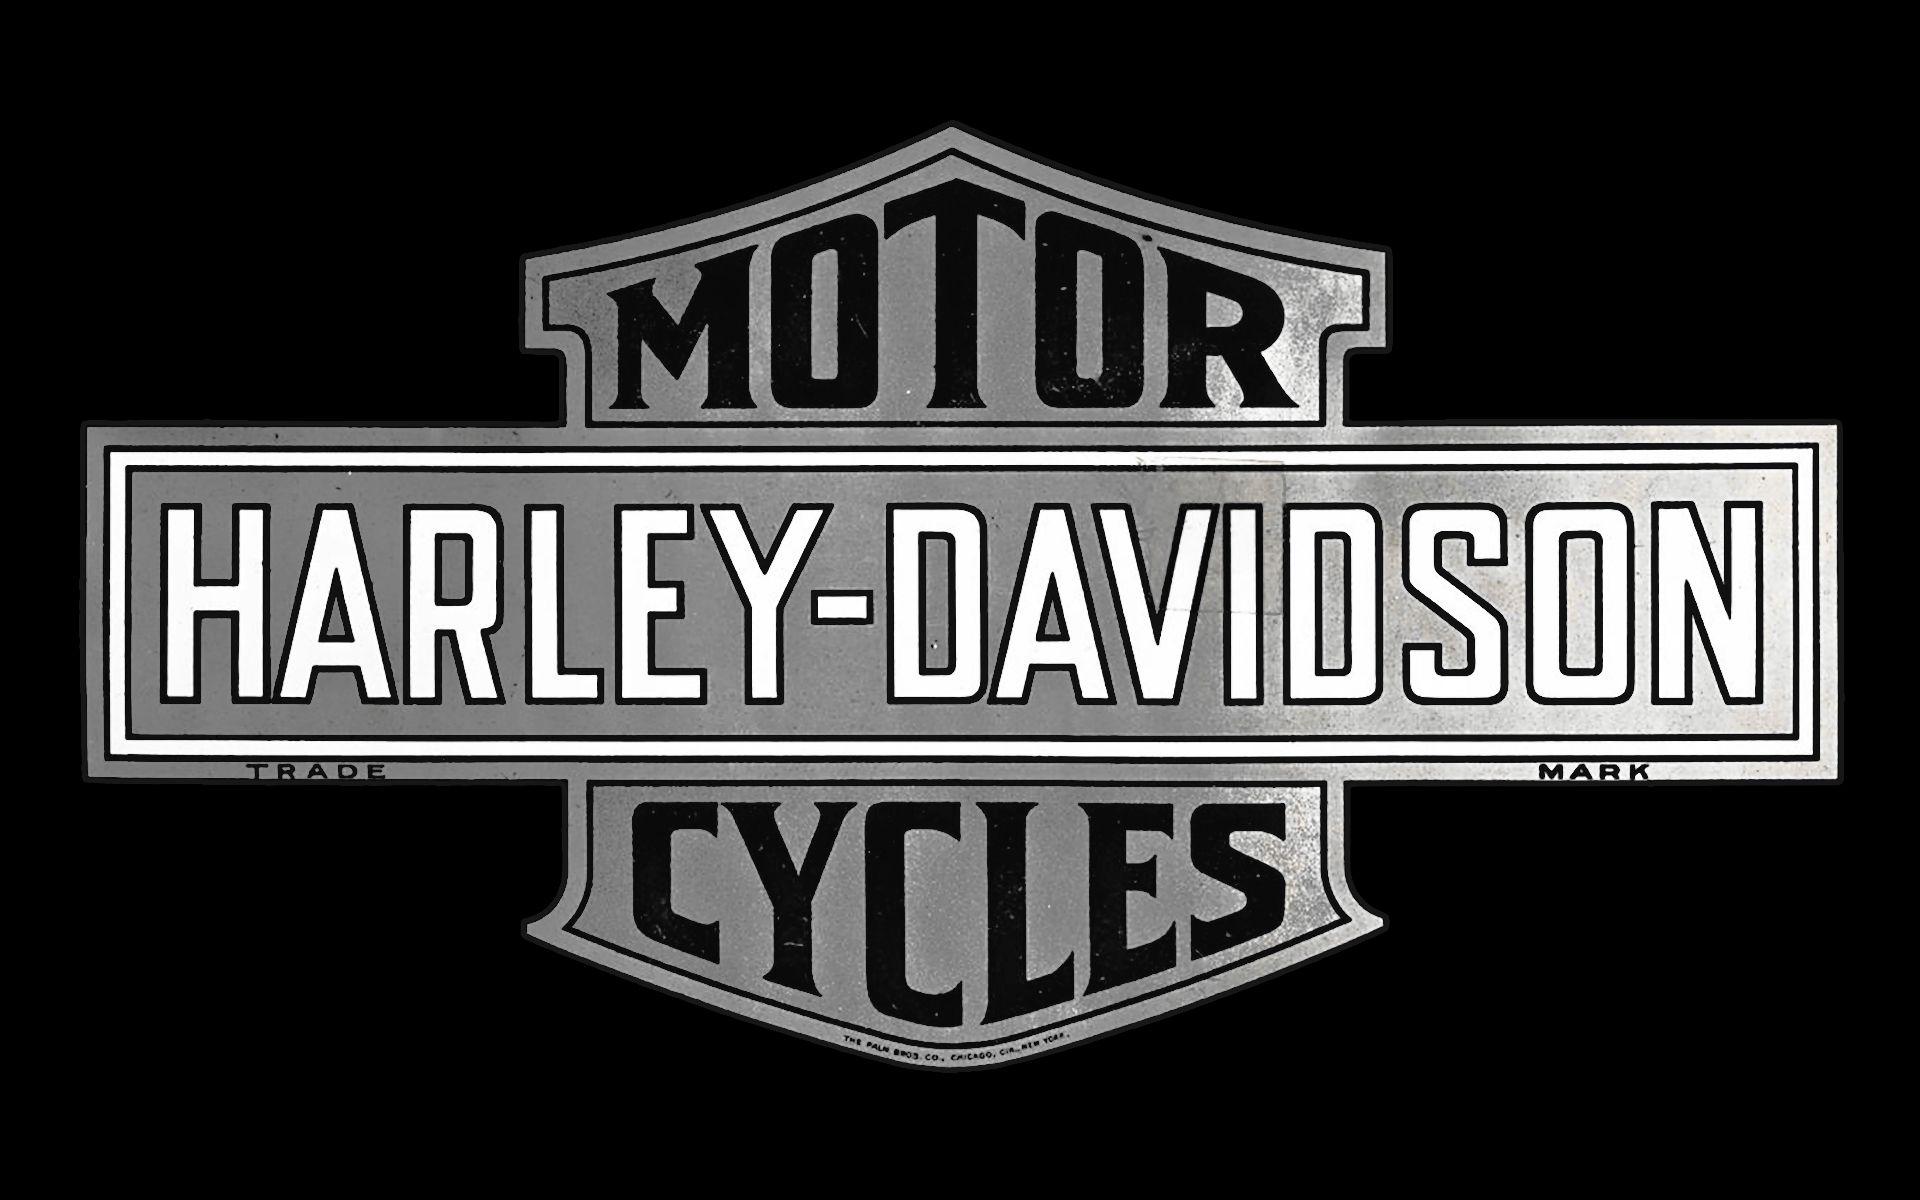 Black and White Harley-Davidson Logo - Harley-Davidson logo | Motorcycle Brands